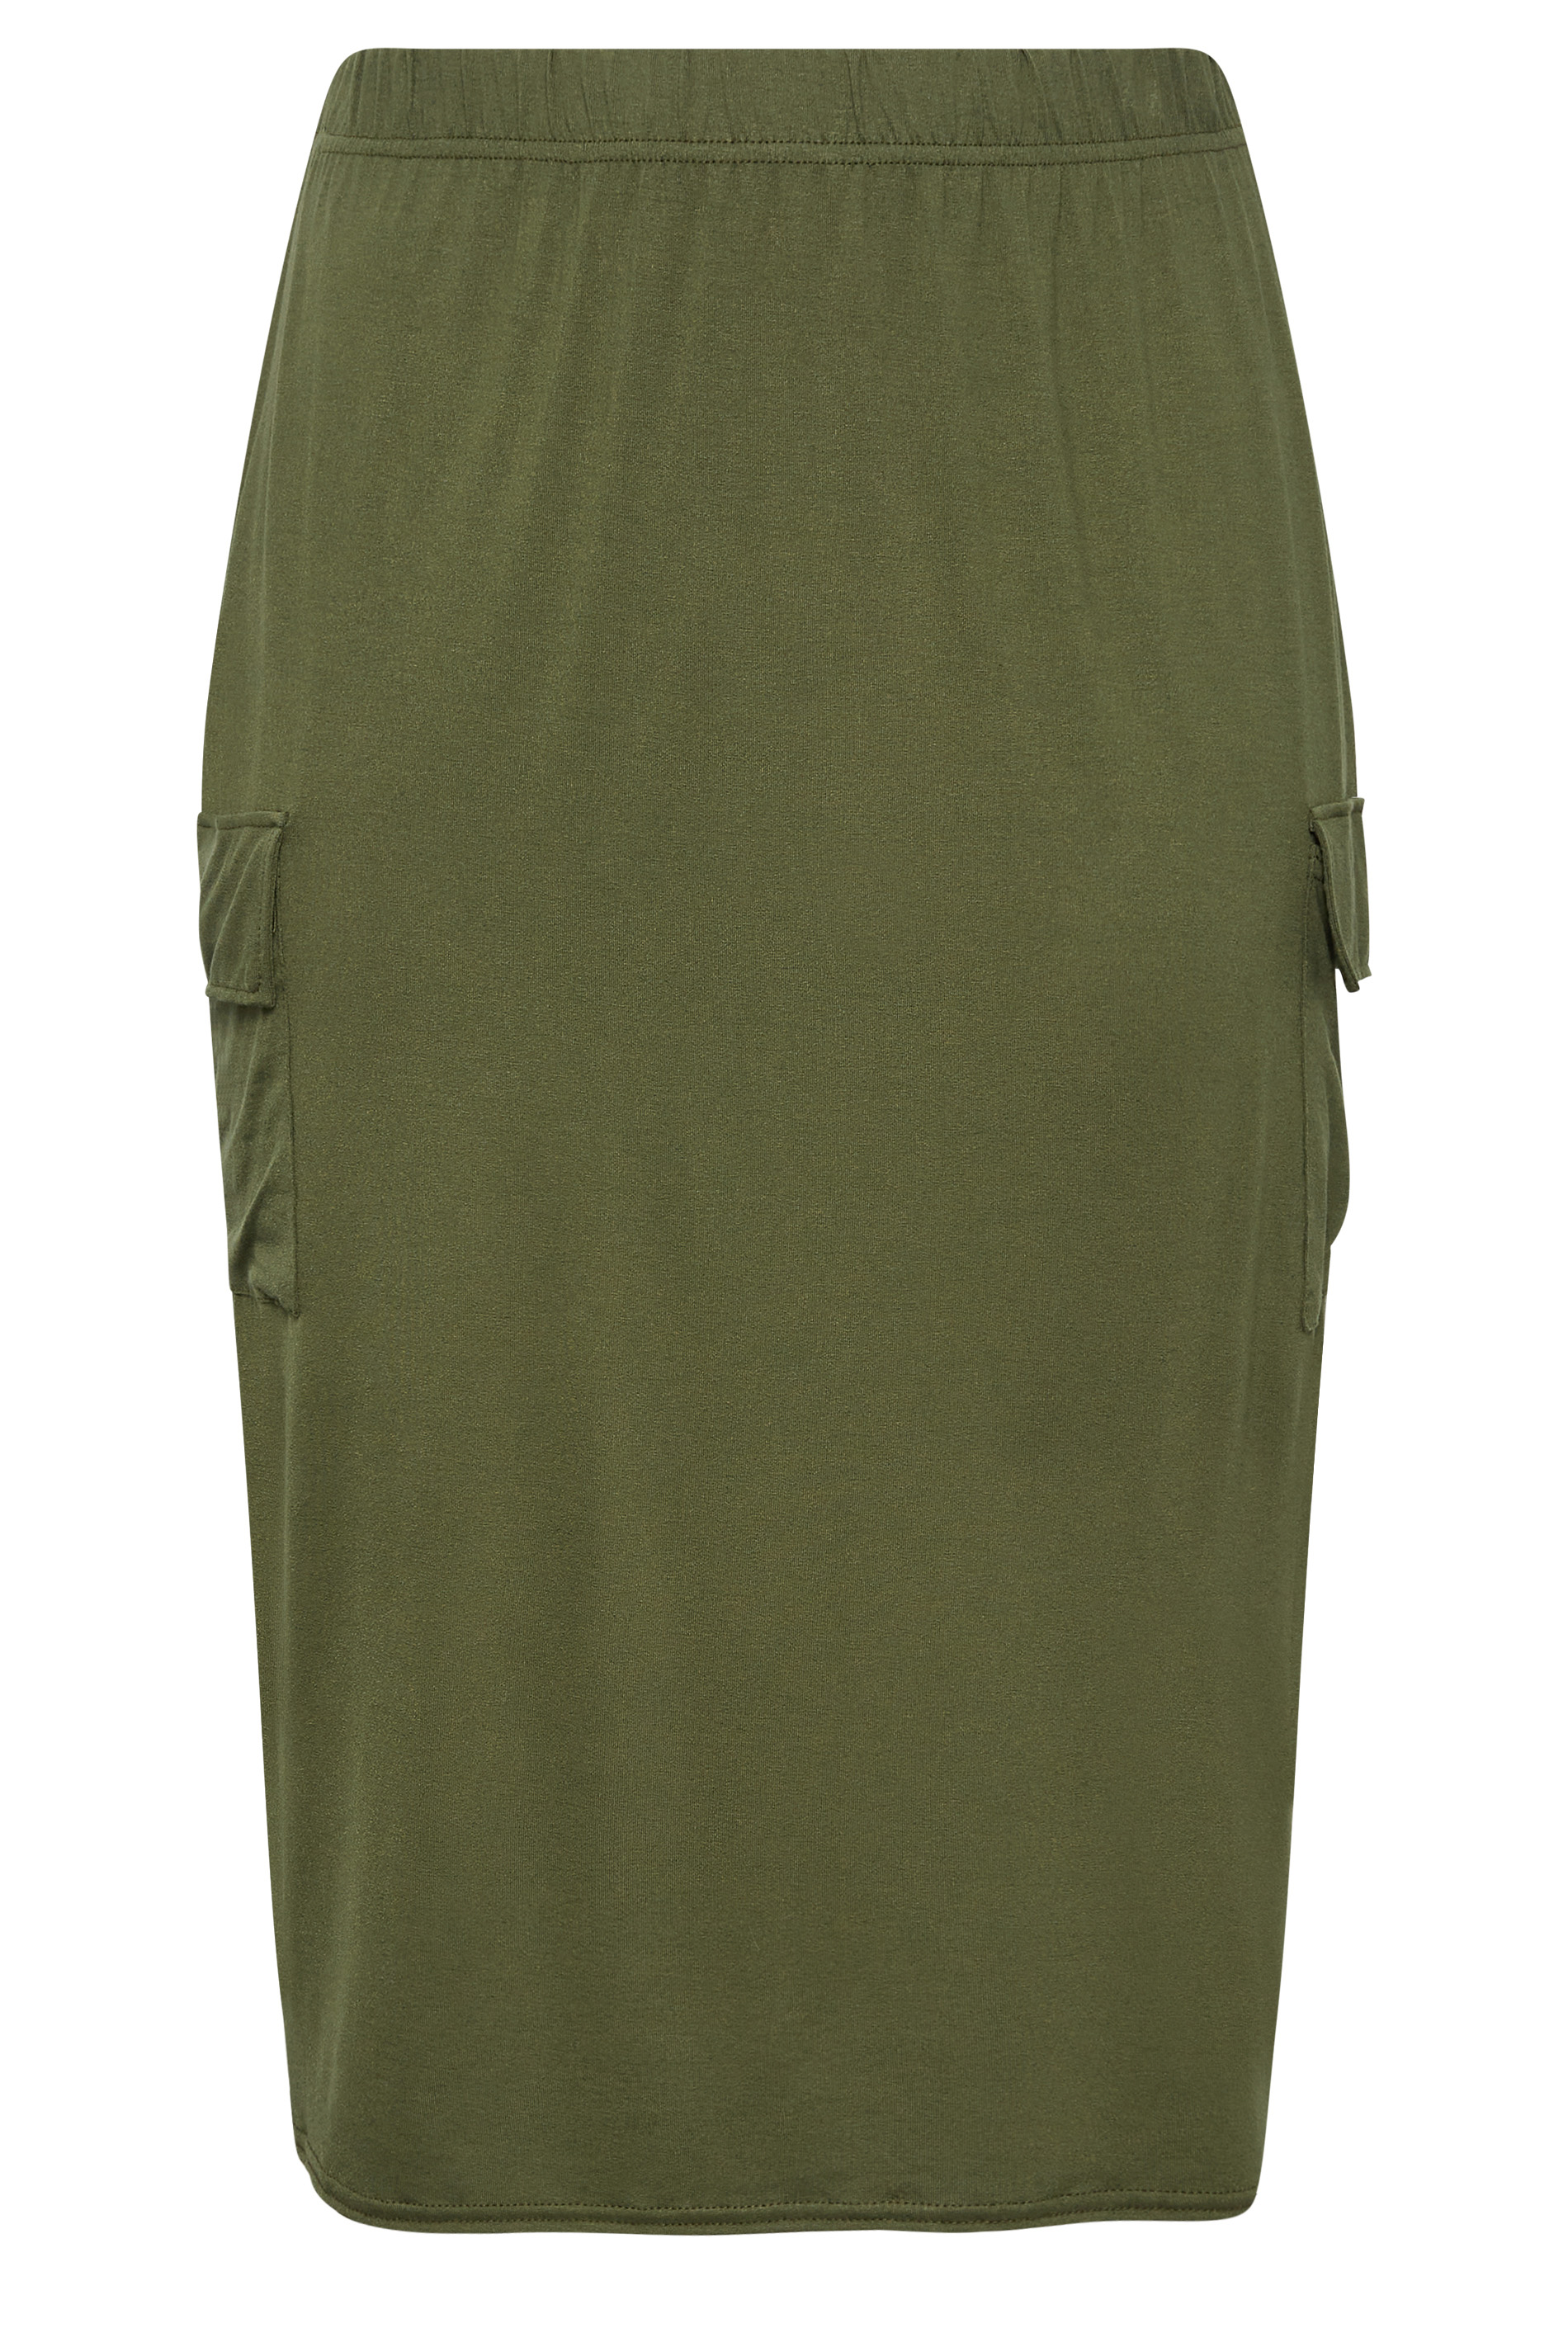 Yours Curve Plus Size Khaki Green Midi Cargo Skirt | Yours Clothing